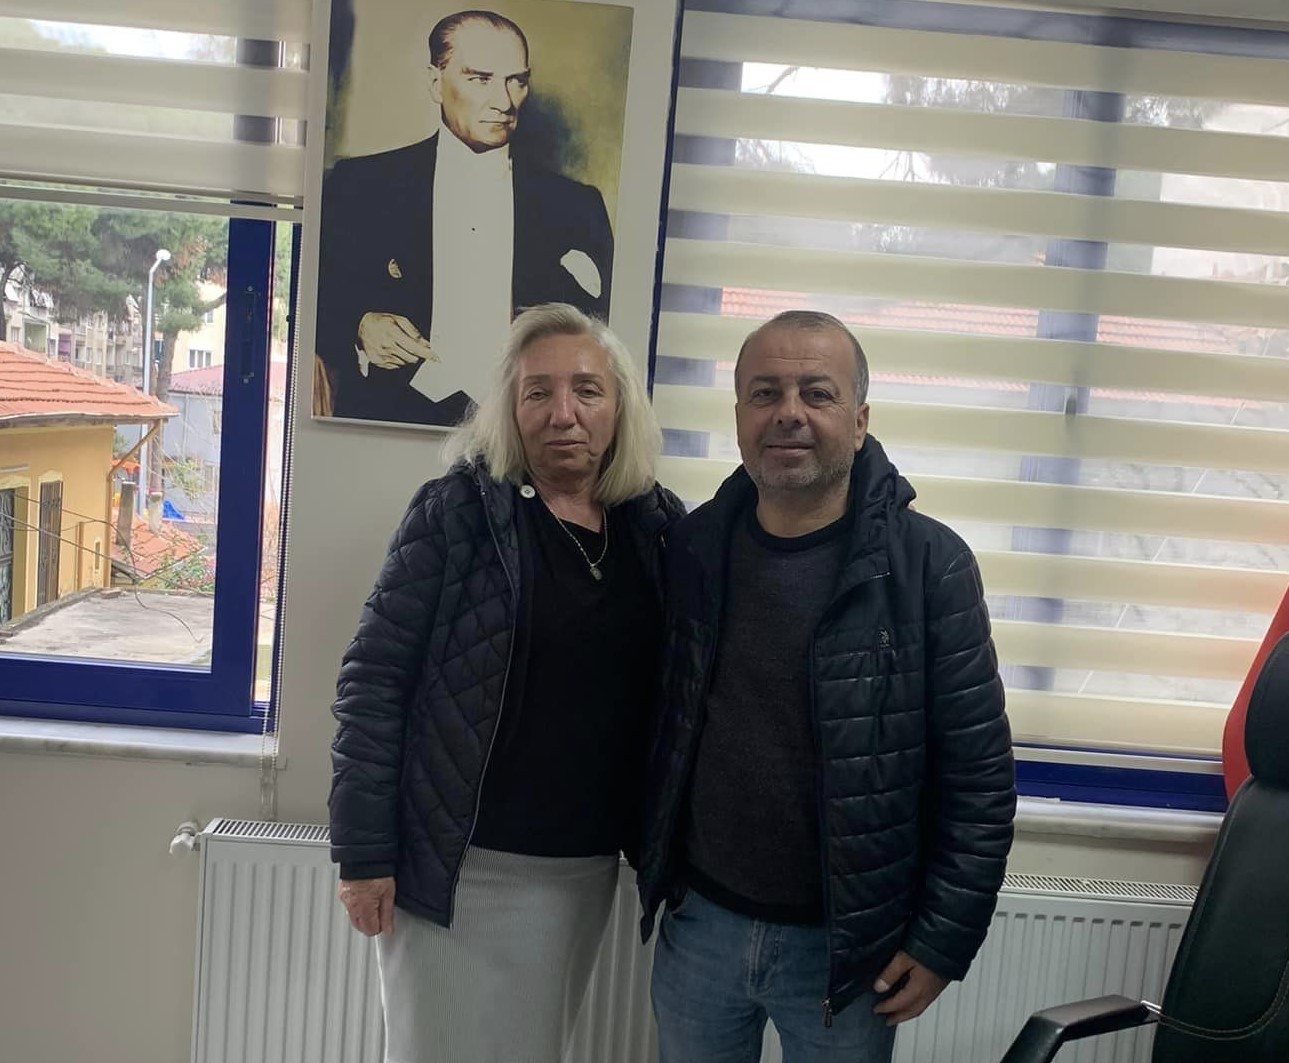 ‘Kan Bankası’ Ümit Yaşar, Ankara’daki hastaya şifa oldu